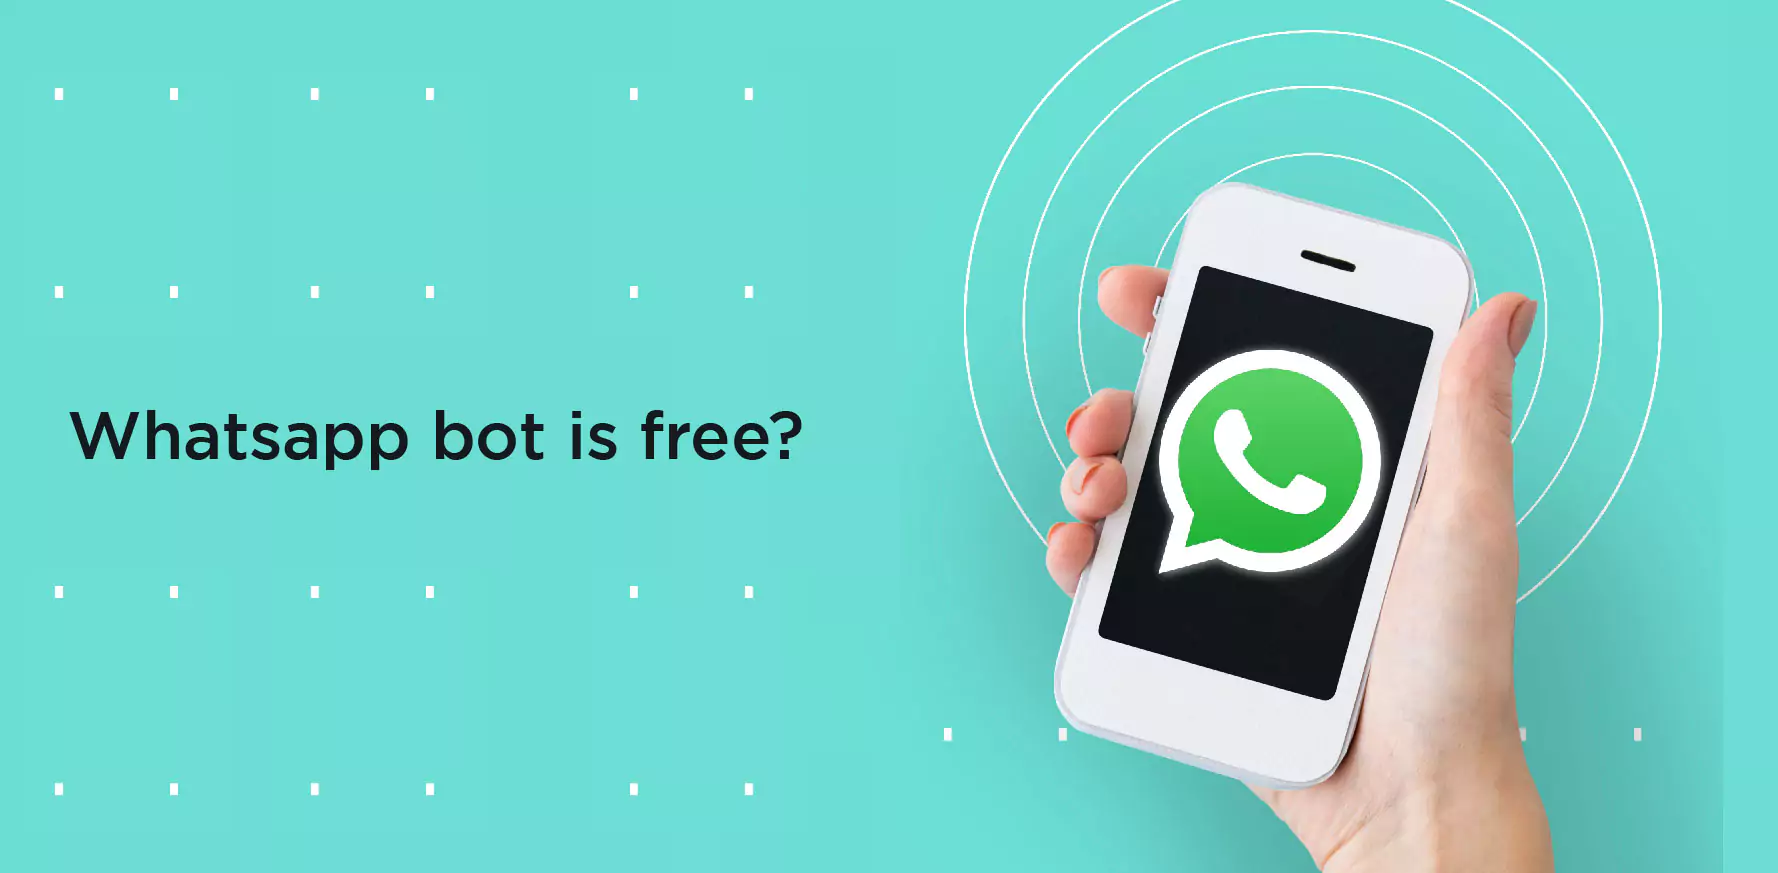 Whatsapp bot is free?